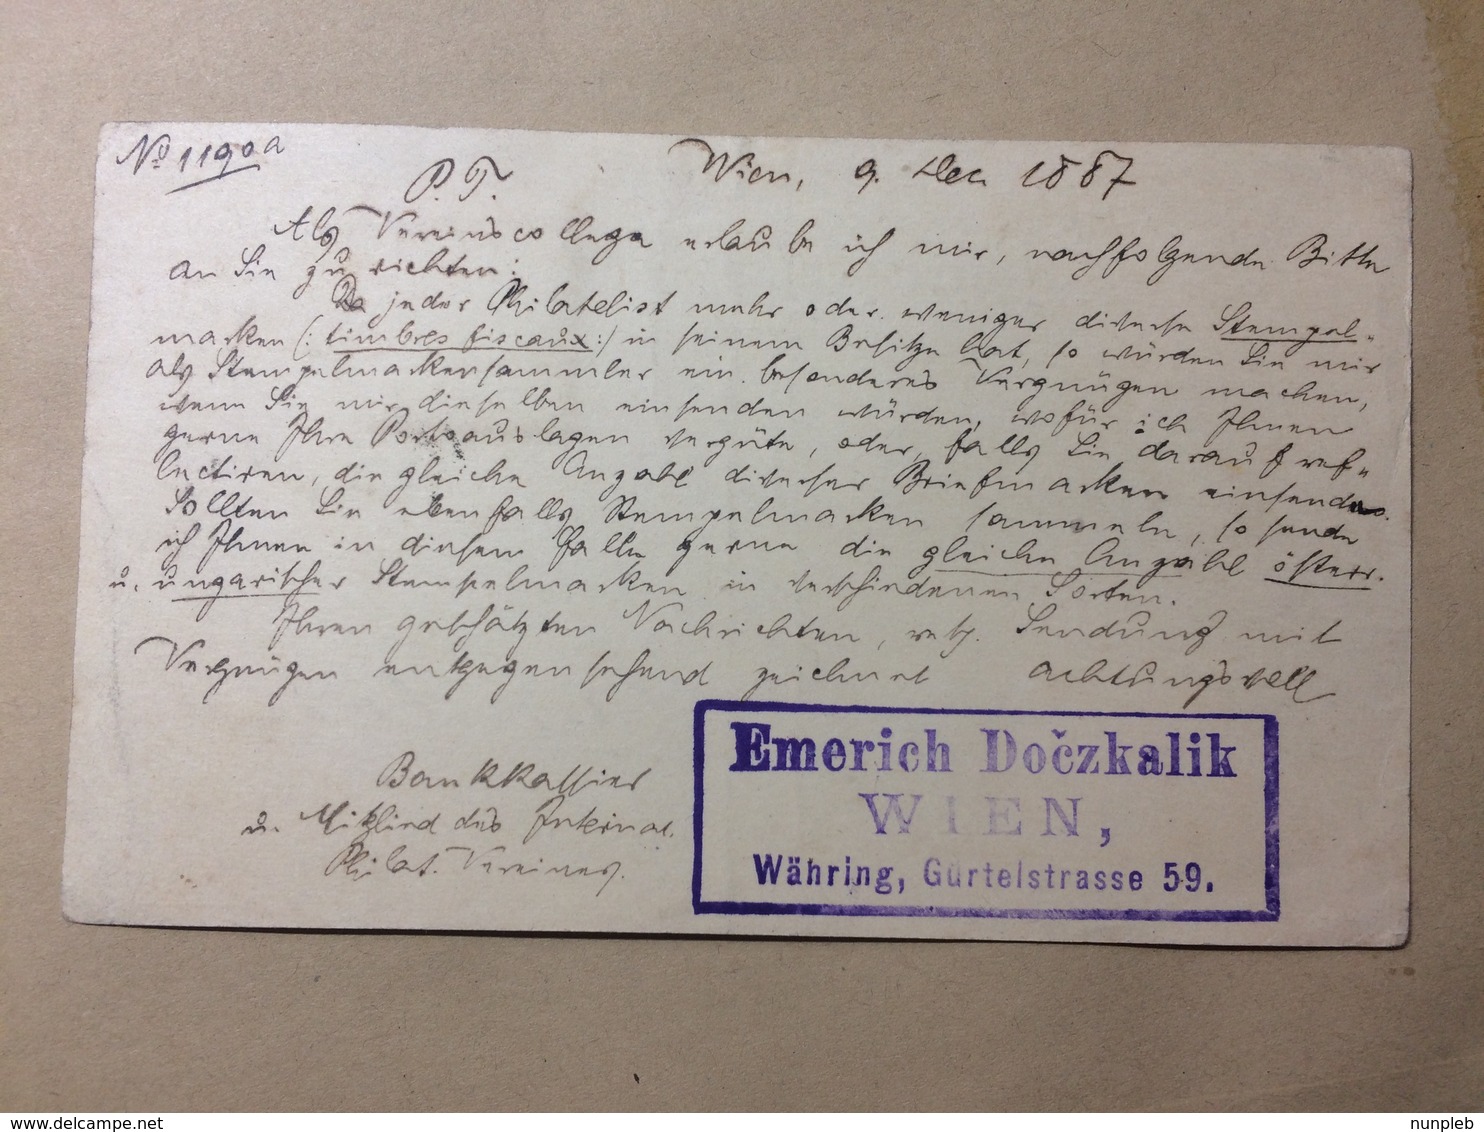 AUSTRIA 1887 Postcard - Wien Vienna To London England - Emerich Dczkalik Cachet - 2Kr Uprated - Covers & Documents